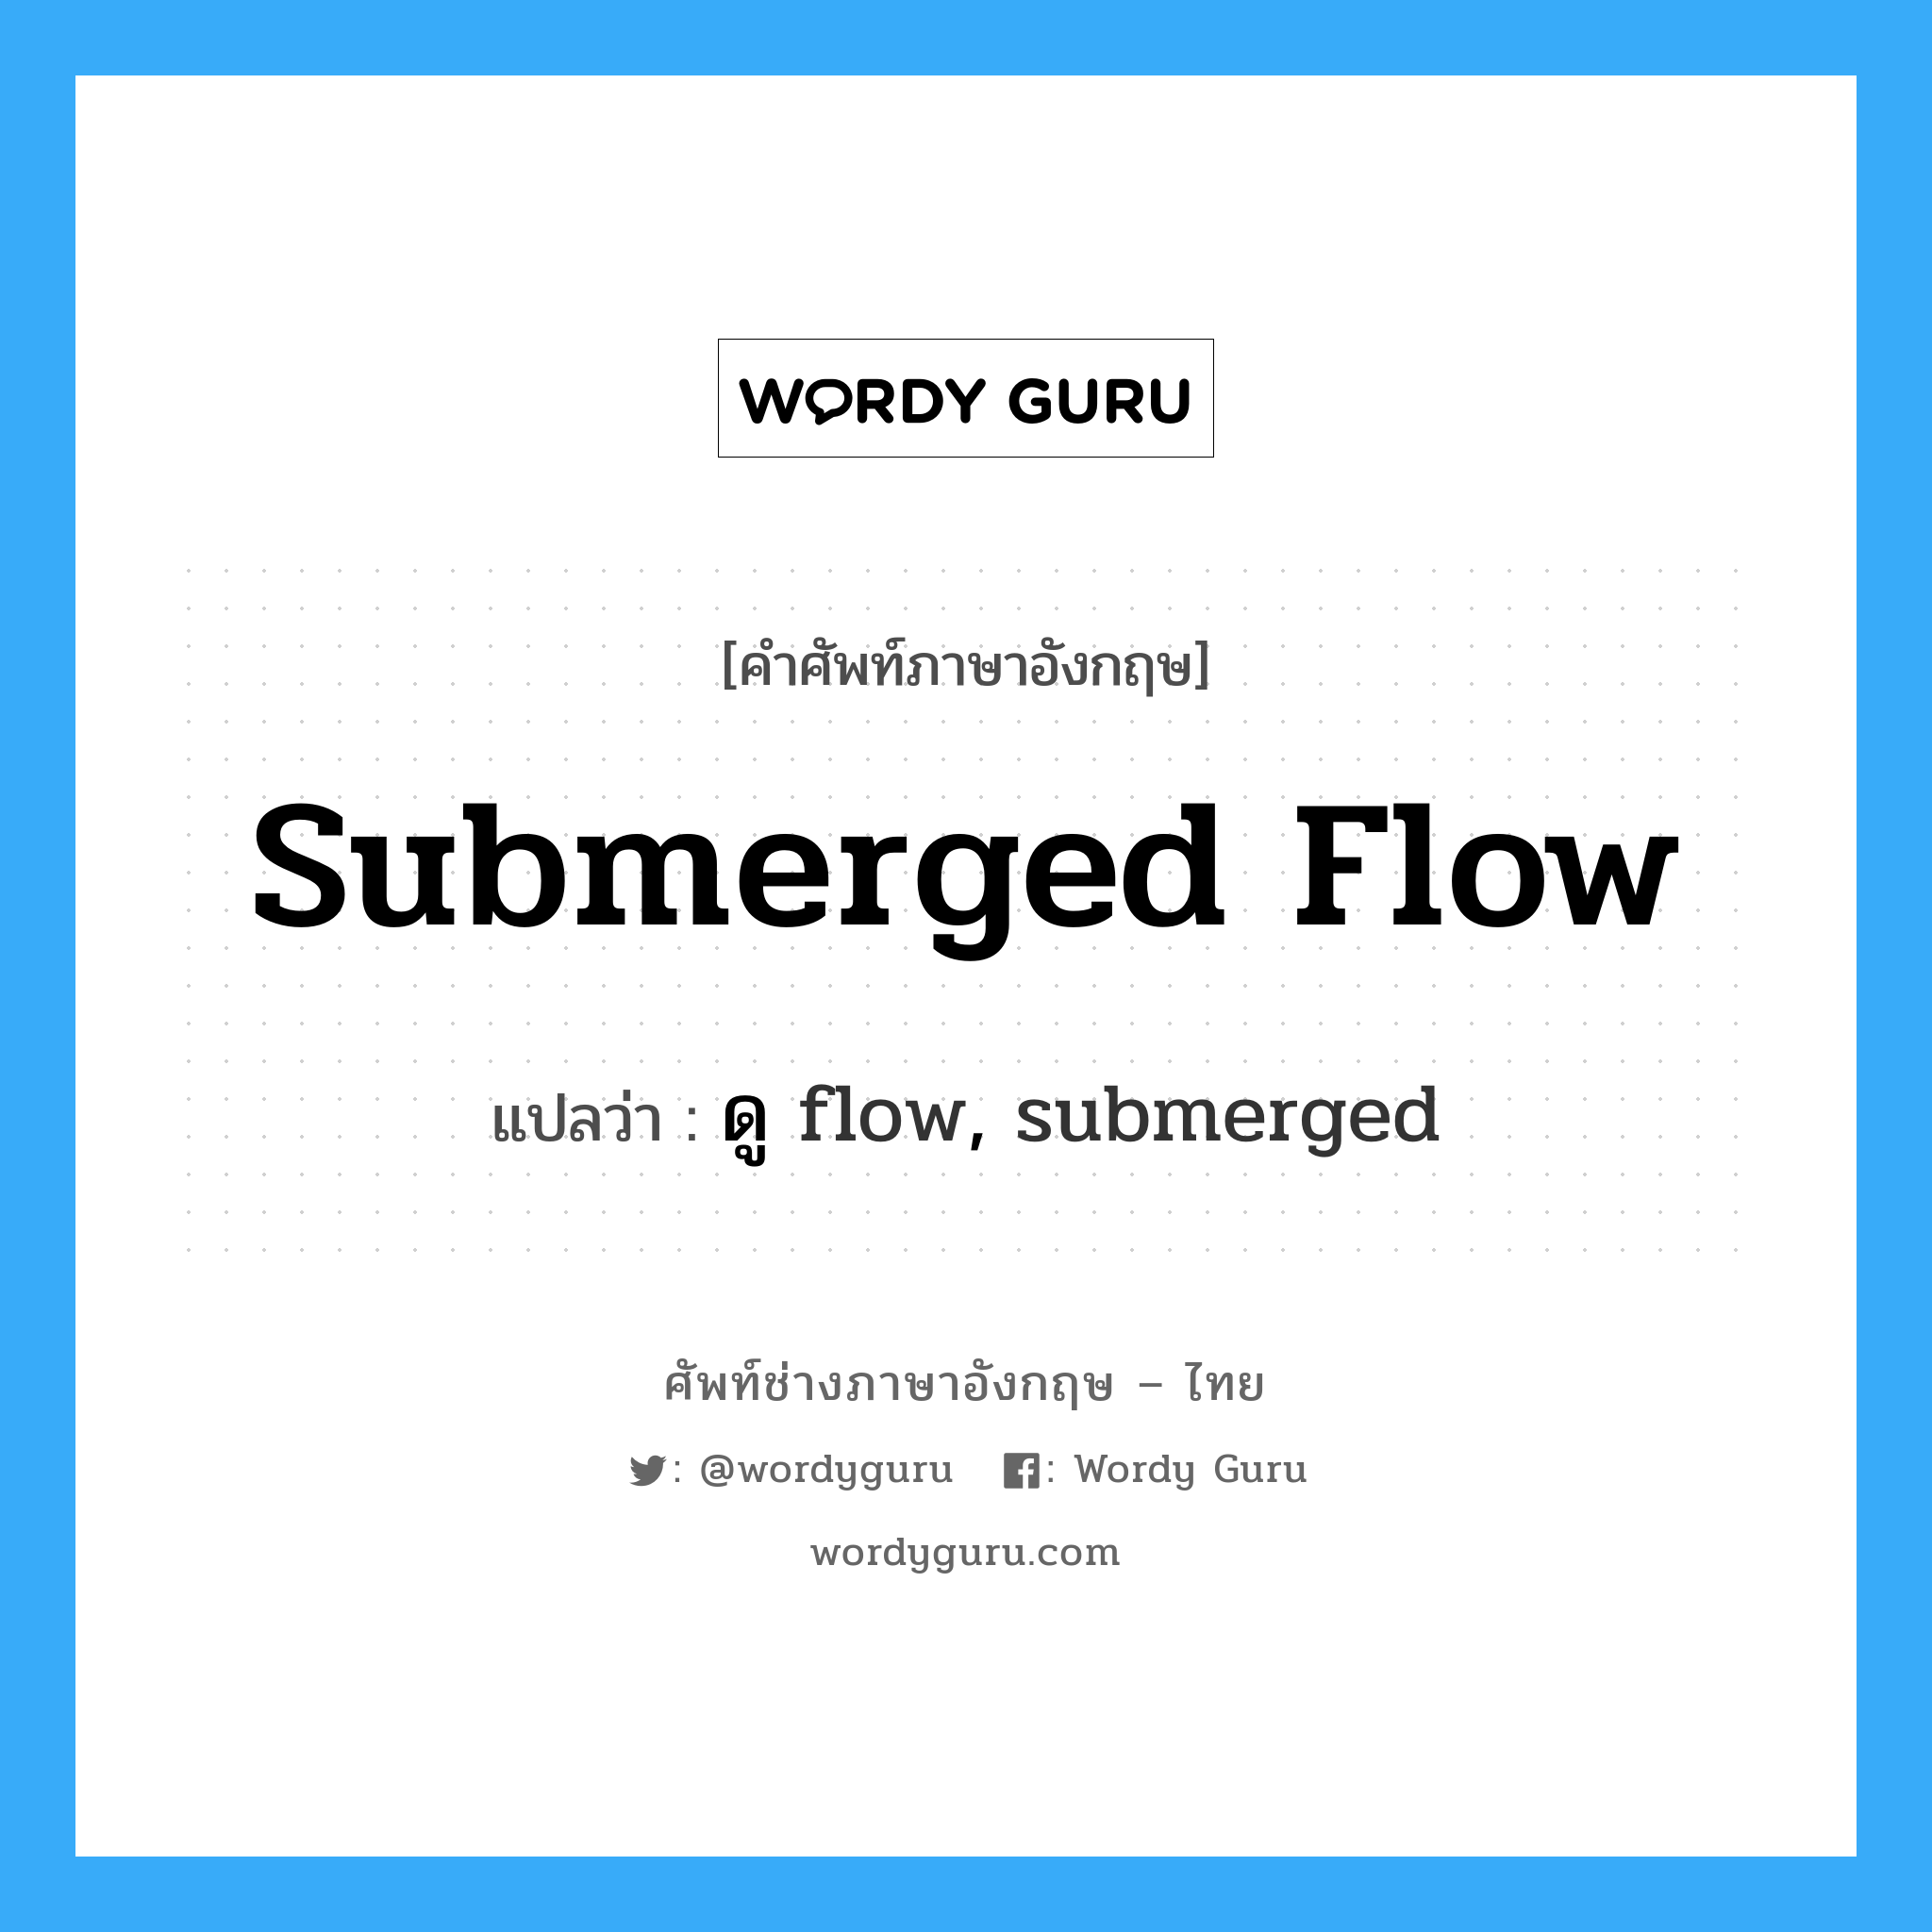 submerged flow แปลว่า?, คำศัพท์ช่างภาษาอังกฤษ - ไทย submerged flow คำศัพท์ภาษาอังกฤษ submerged flow แปลว่า ดู flow, submerged